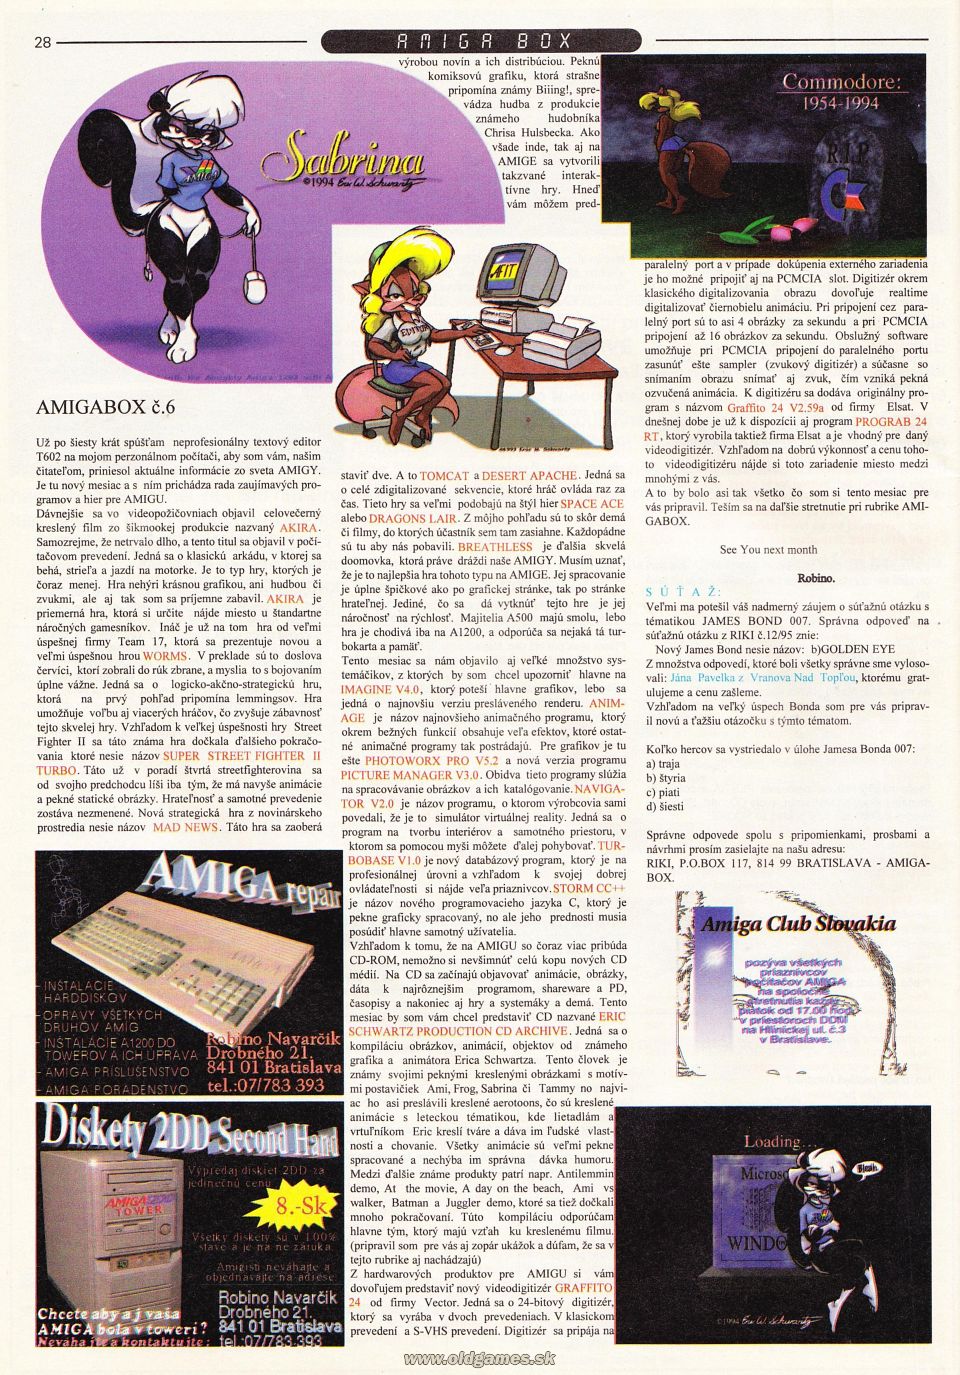 Amiga Box (6)